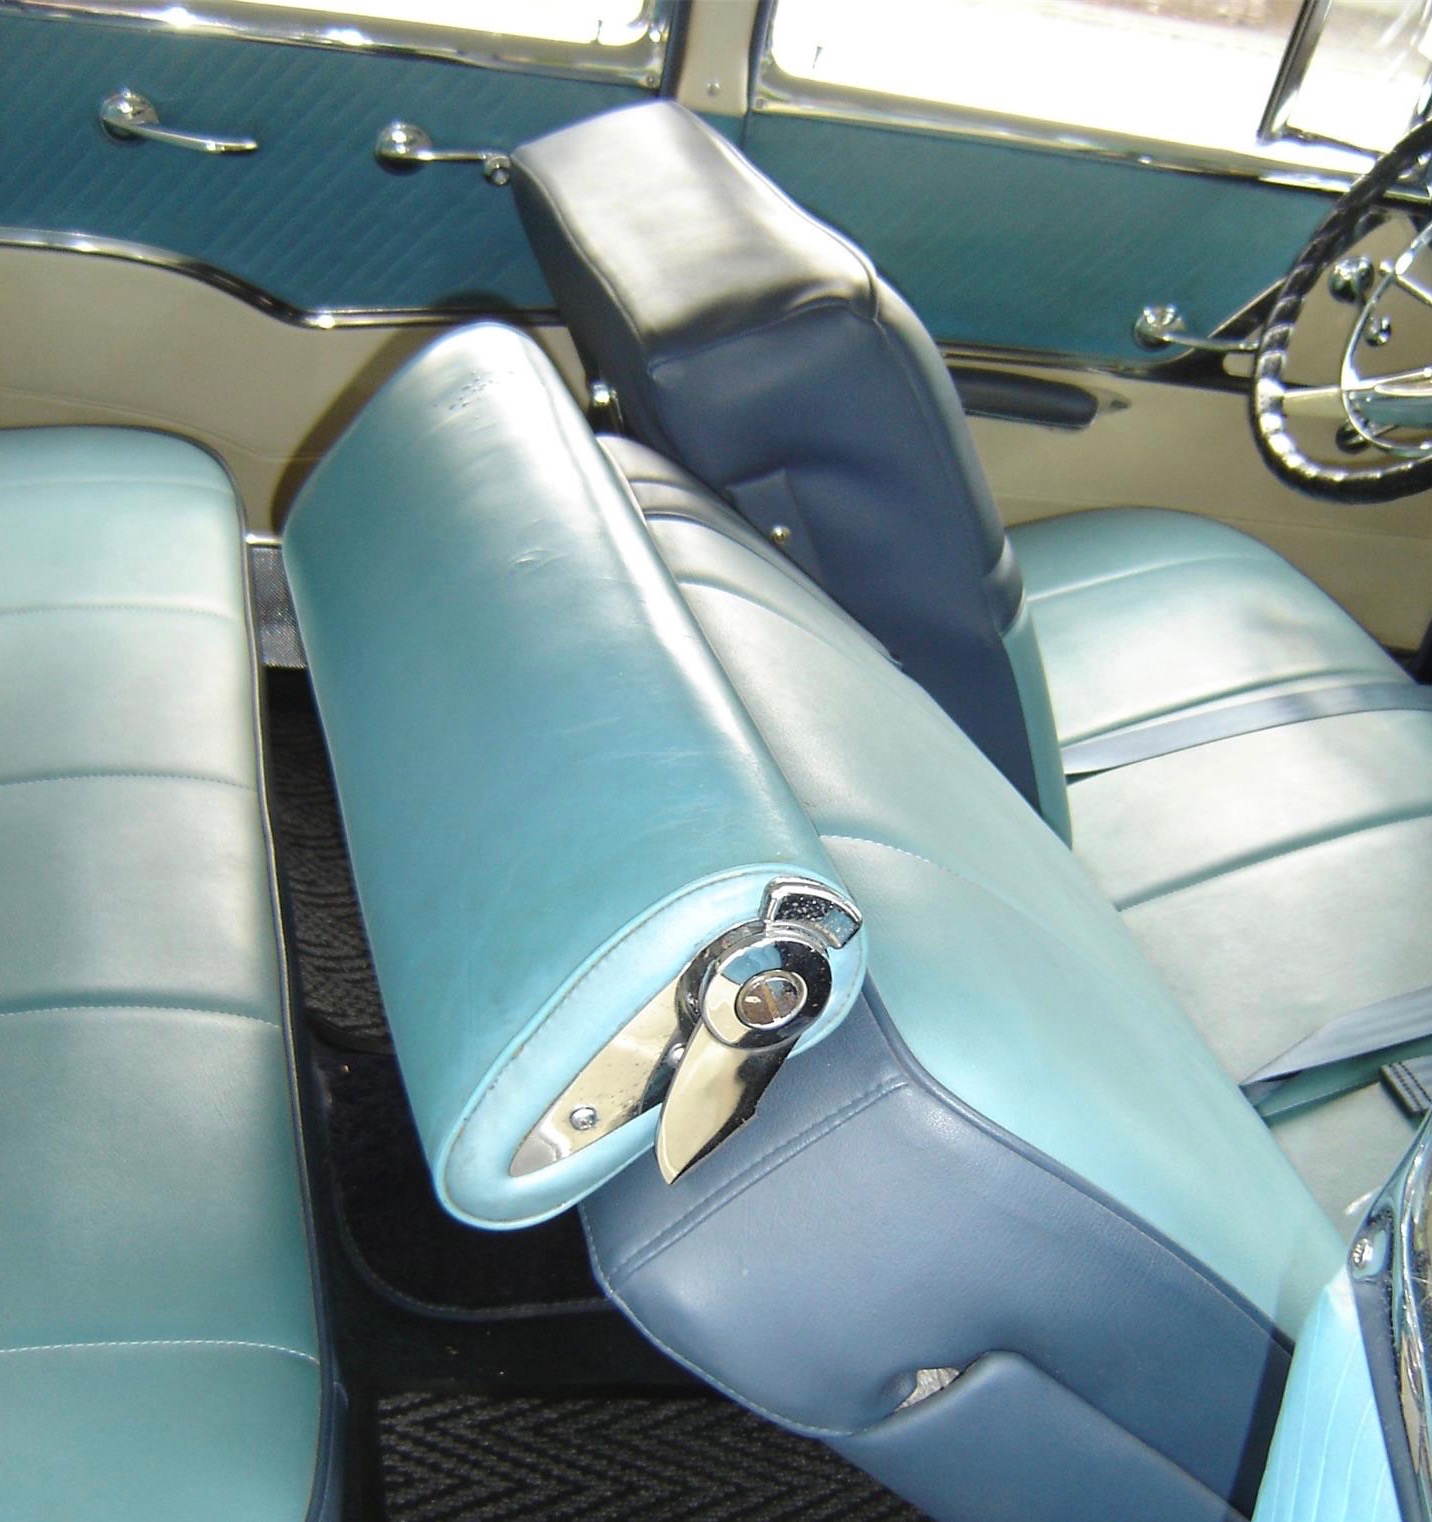 1957 Pontiac Star Chief Safari, Pontiac station wagon with Transcontinental upgrades, ClassicCars.com Journal